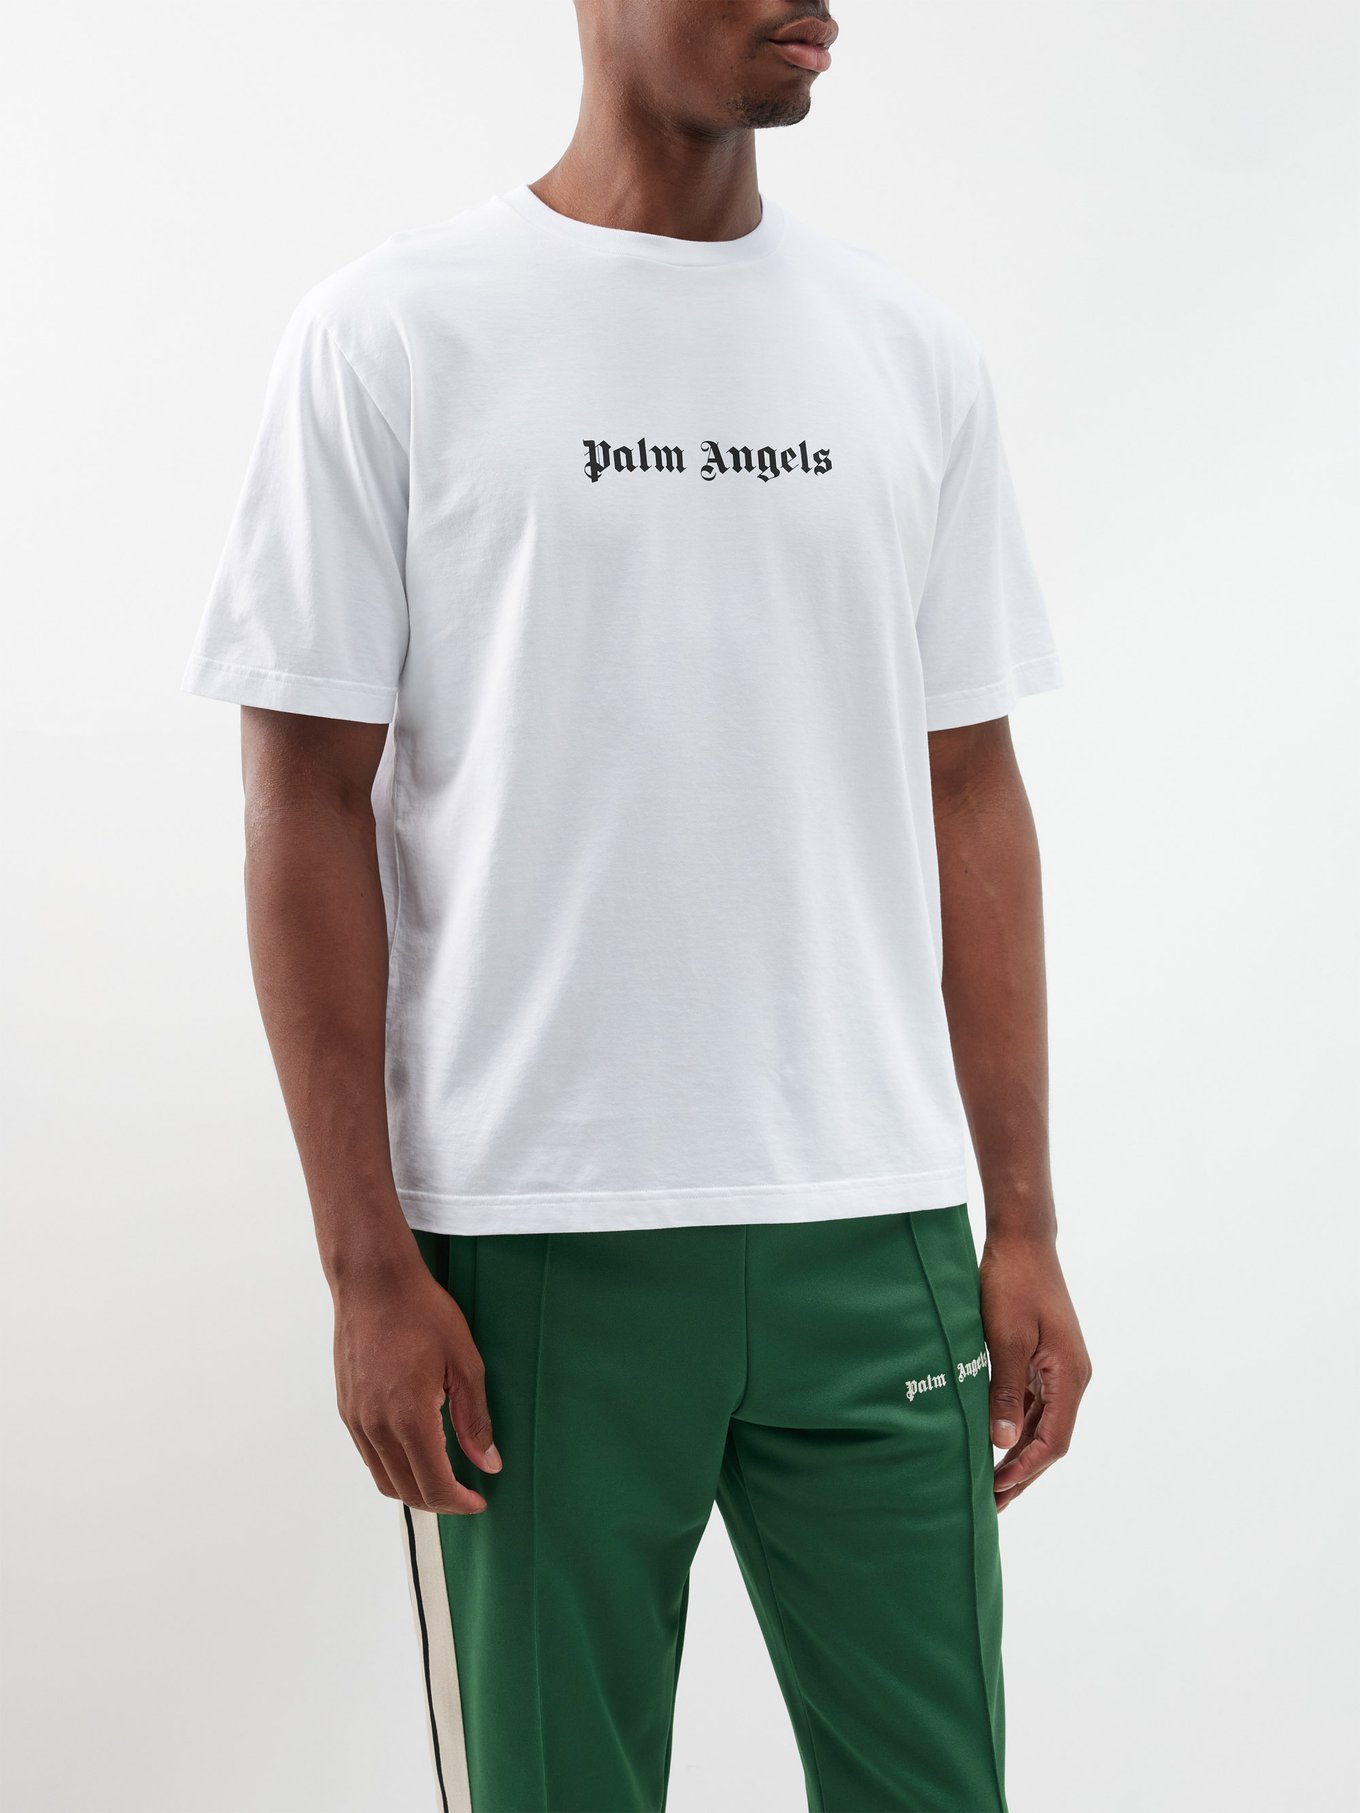 Palm angels Tシャツ - トップス